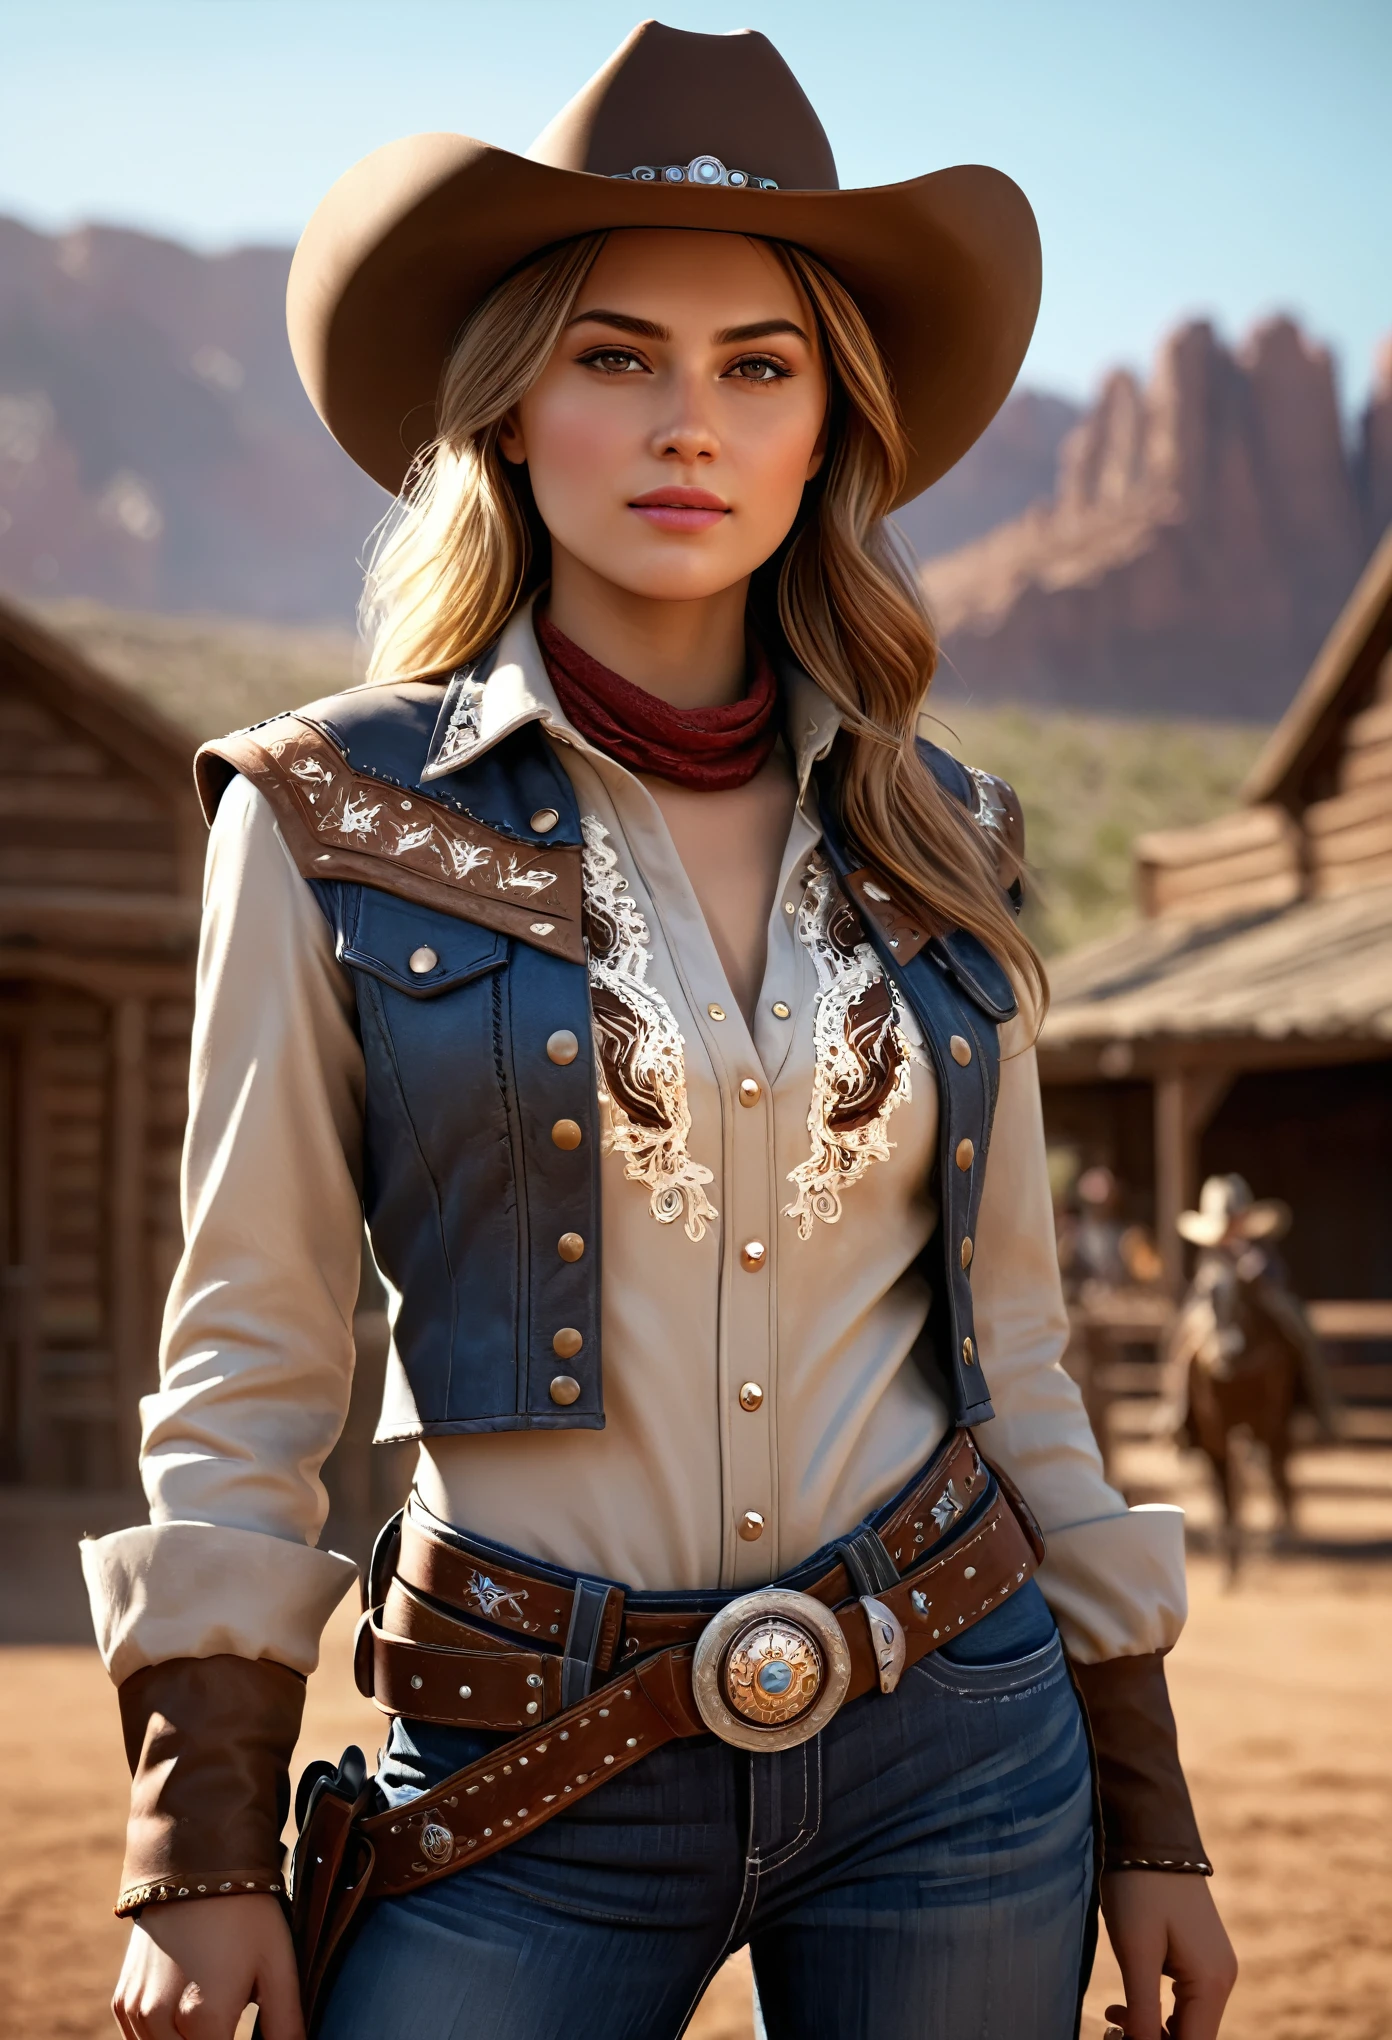 a beautiful young girl wearing a highly 현실적인 western cowgirl outfit, 판타지 아트, photo현실적인, 동적 조명, 아트스테이션, 매우 상세한 얼굴, 4K, 수상 경력이 있는, (최고의 품질,4K,8K,고등어,걸작:1.2),매우 상세한,(현실적인,photo현실적인,photo-현실적인:1.37),복잡한 세부 사항,극적인 포즈,영화적 구성,생생한 색상,자연스러운 피부톤,빛나는 하이라이트,대기 조명,피사계 심도,체적 조명